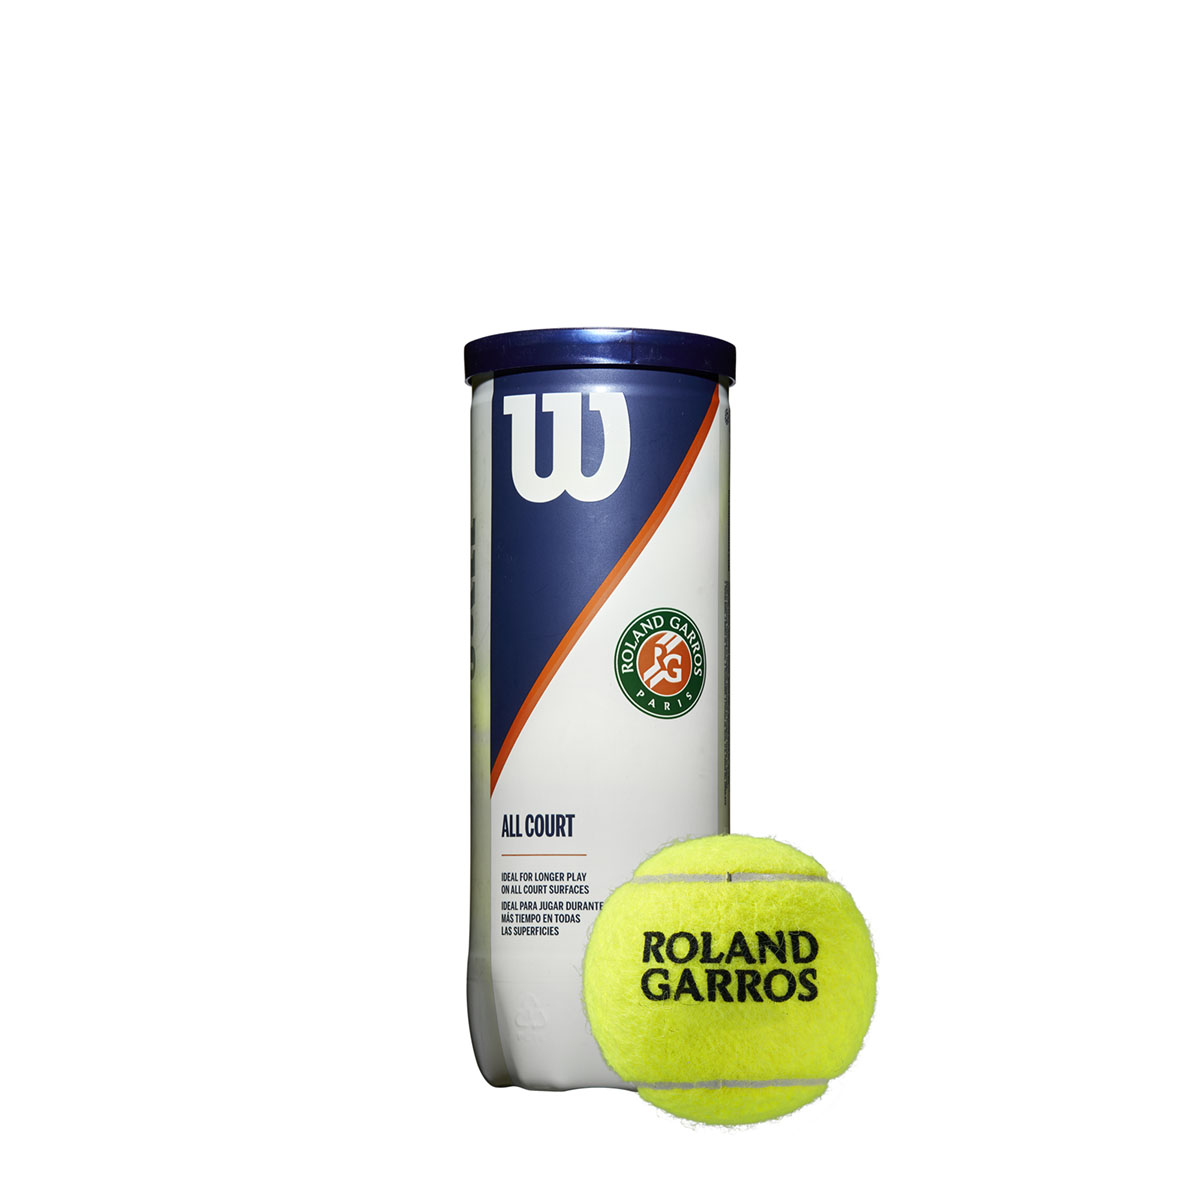 Wrt126400 4 Roland Garros All Court 3 Ball Can Clay Bu Donut Cap W Ball